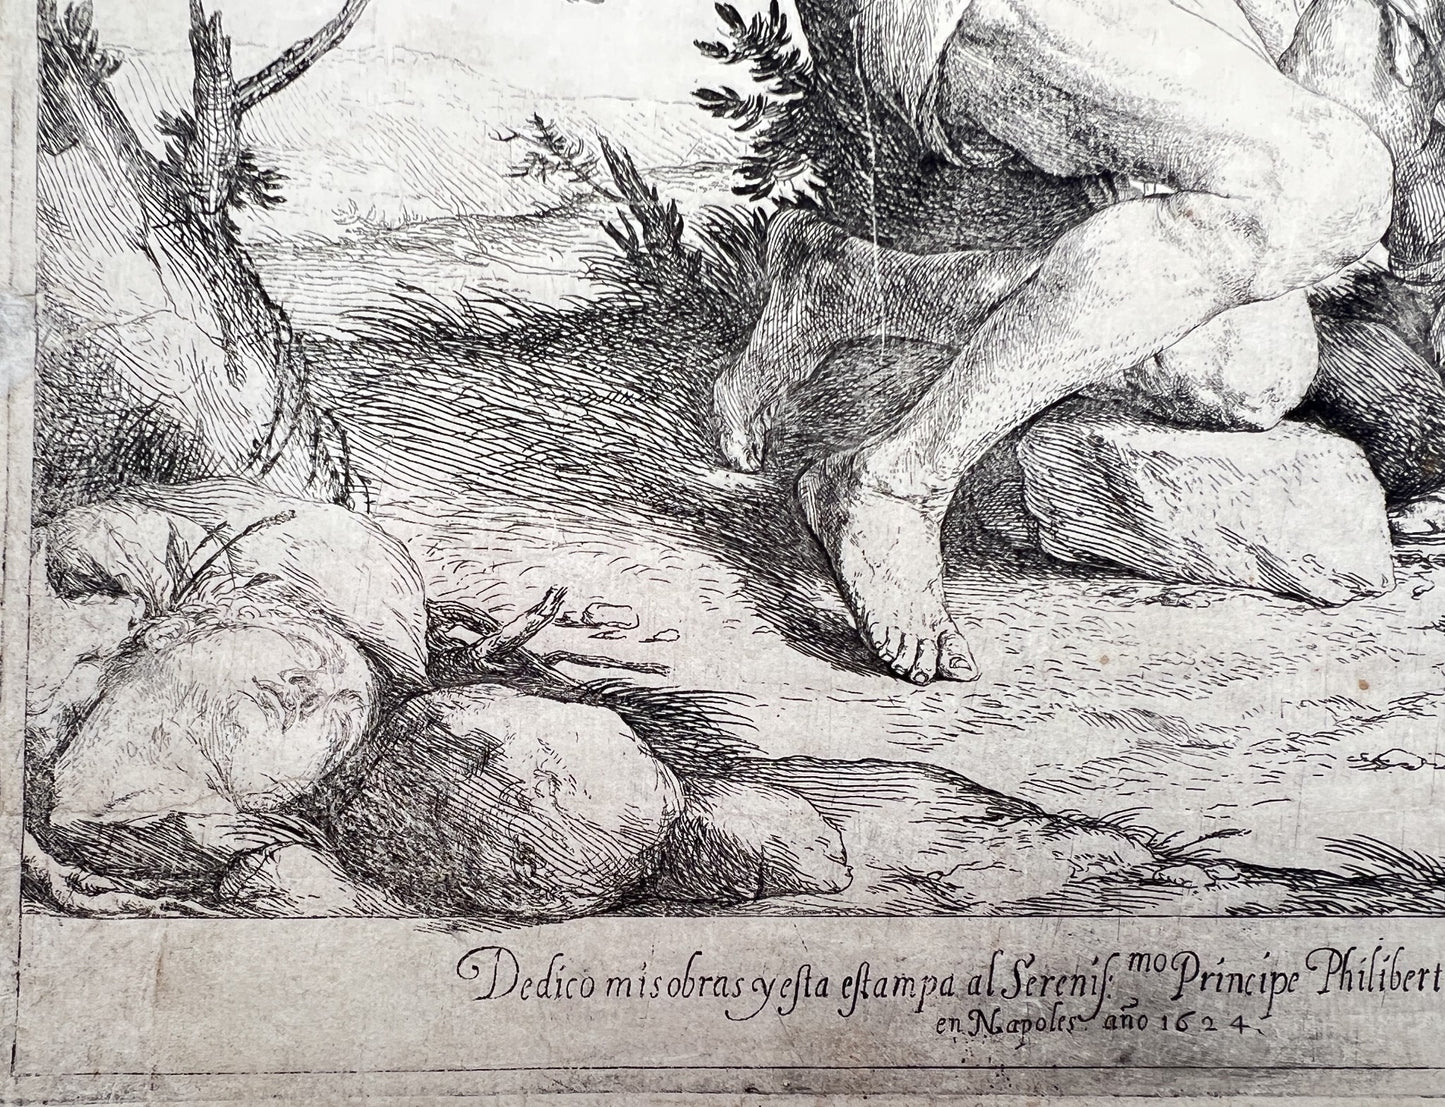 Antique Religious Print - The Martyrdom of Saint Bartholomew - Jusepe de Ribera